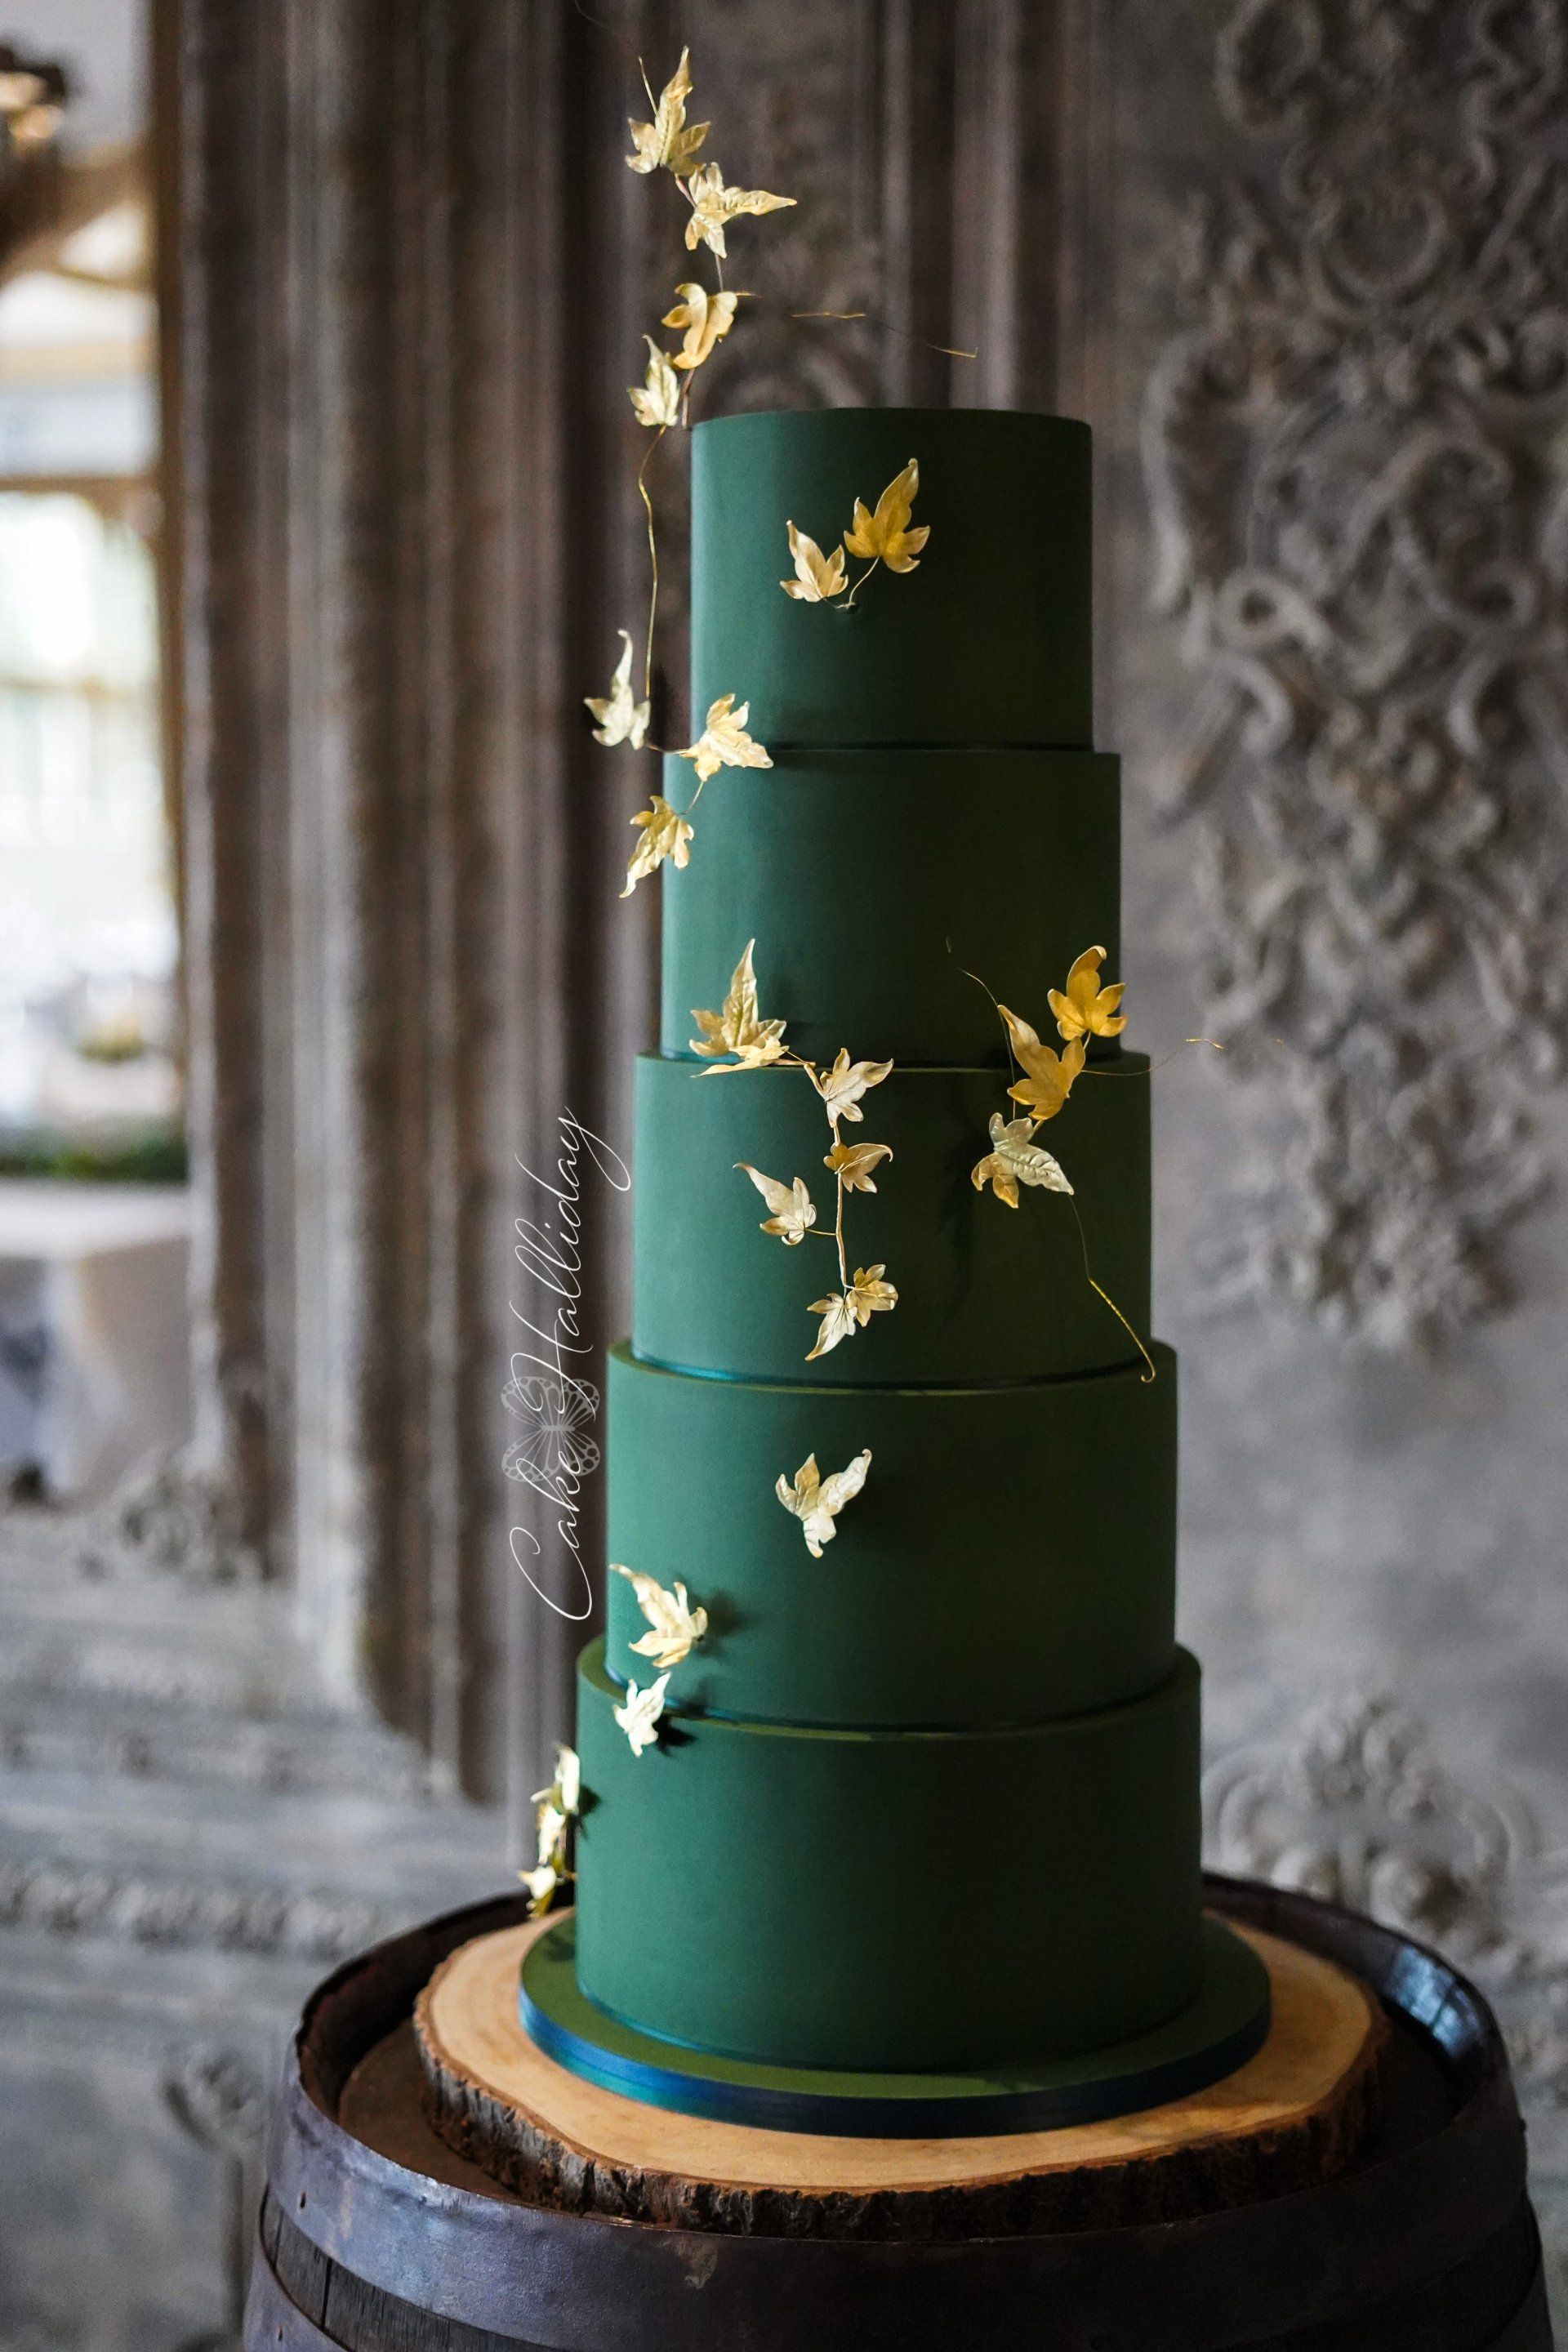 Enterkine House Cake Halliday wedding cake